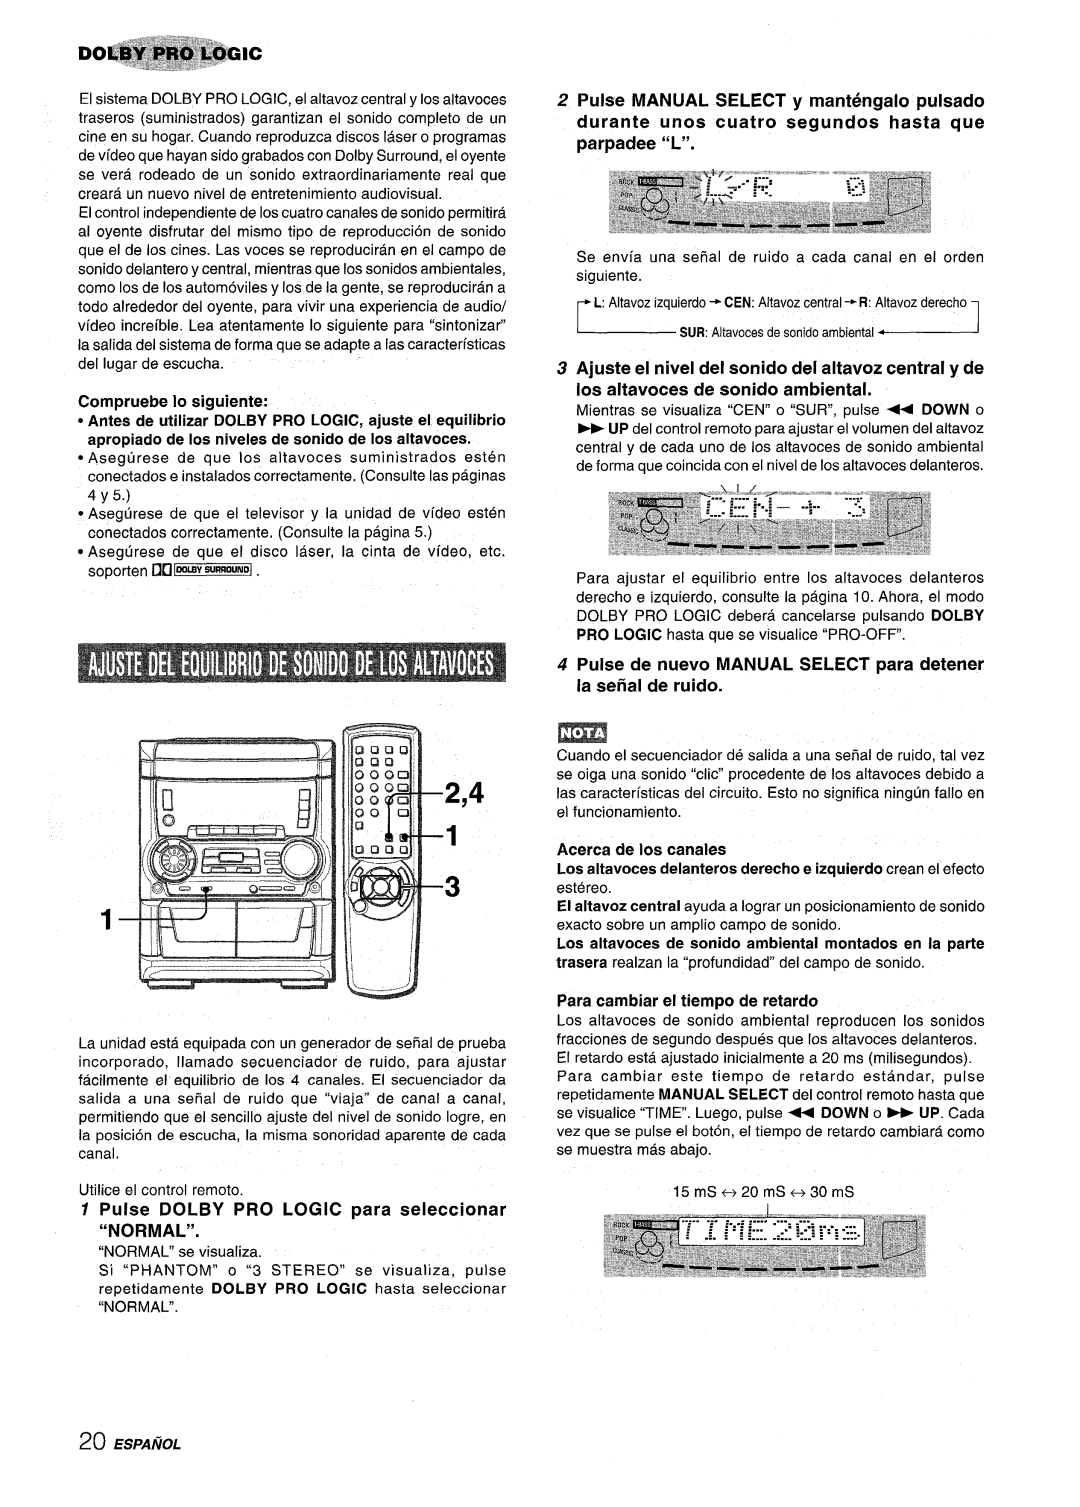 Aiwa SX-C605, SX-WNA555 manual Pulse DOLBY PRO LOGIC para seleccionar “NORMAL”, Pulse MANUAL SELECT y mantengalo pulsado 